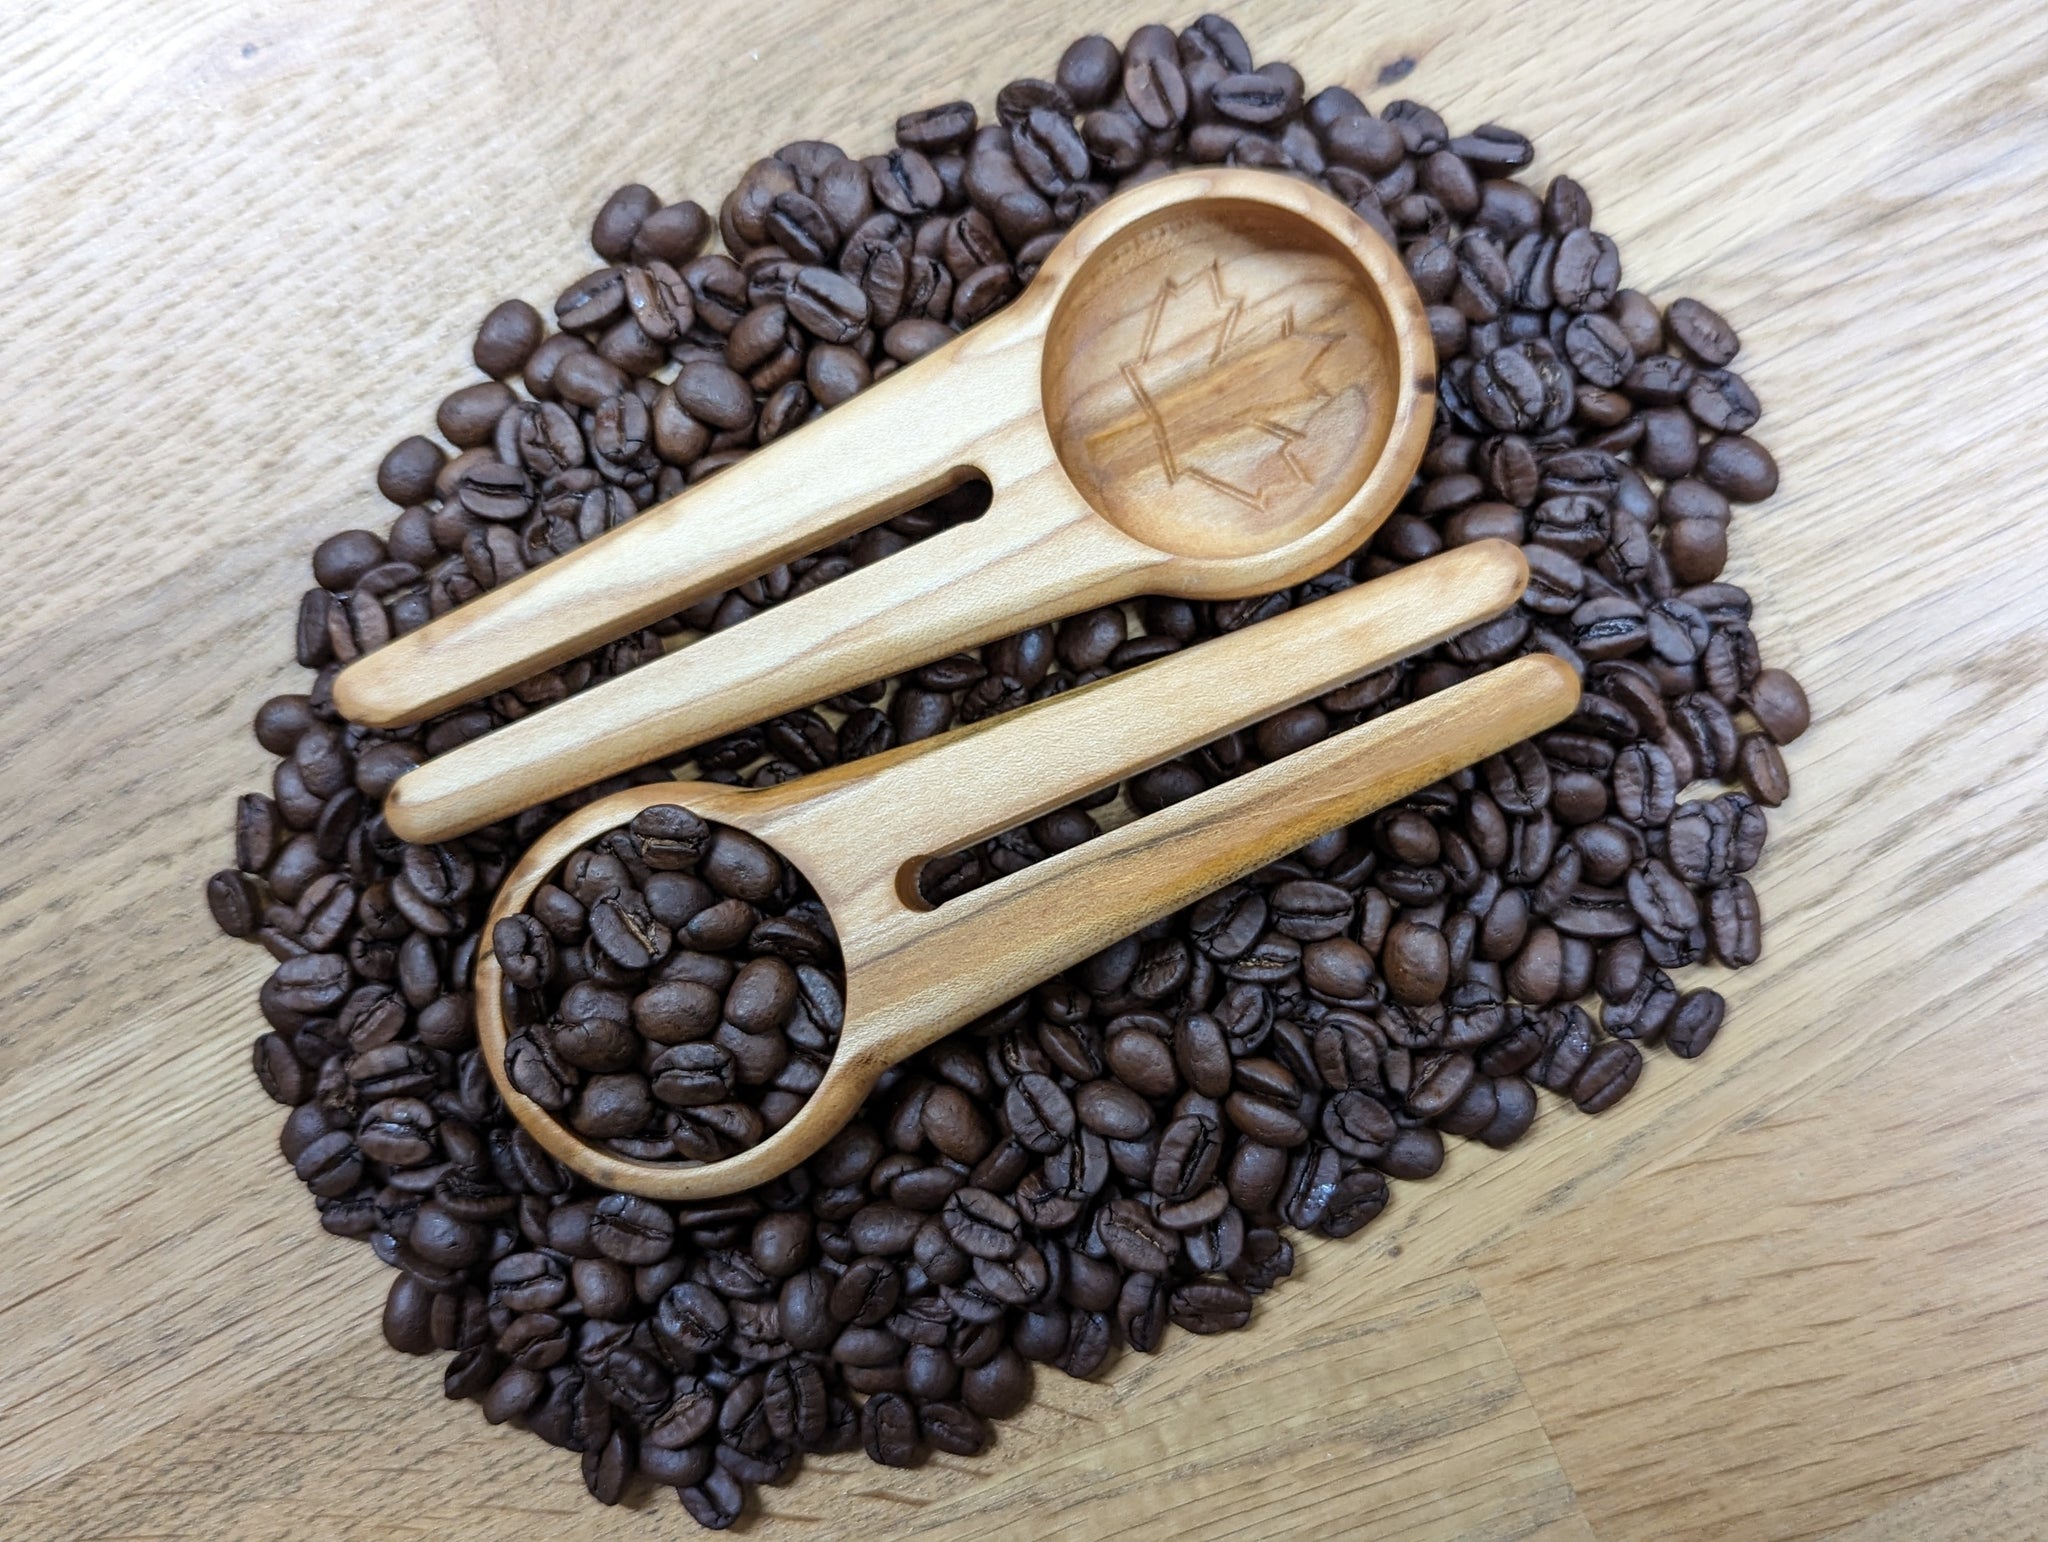 Coffee Coffee Scoop